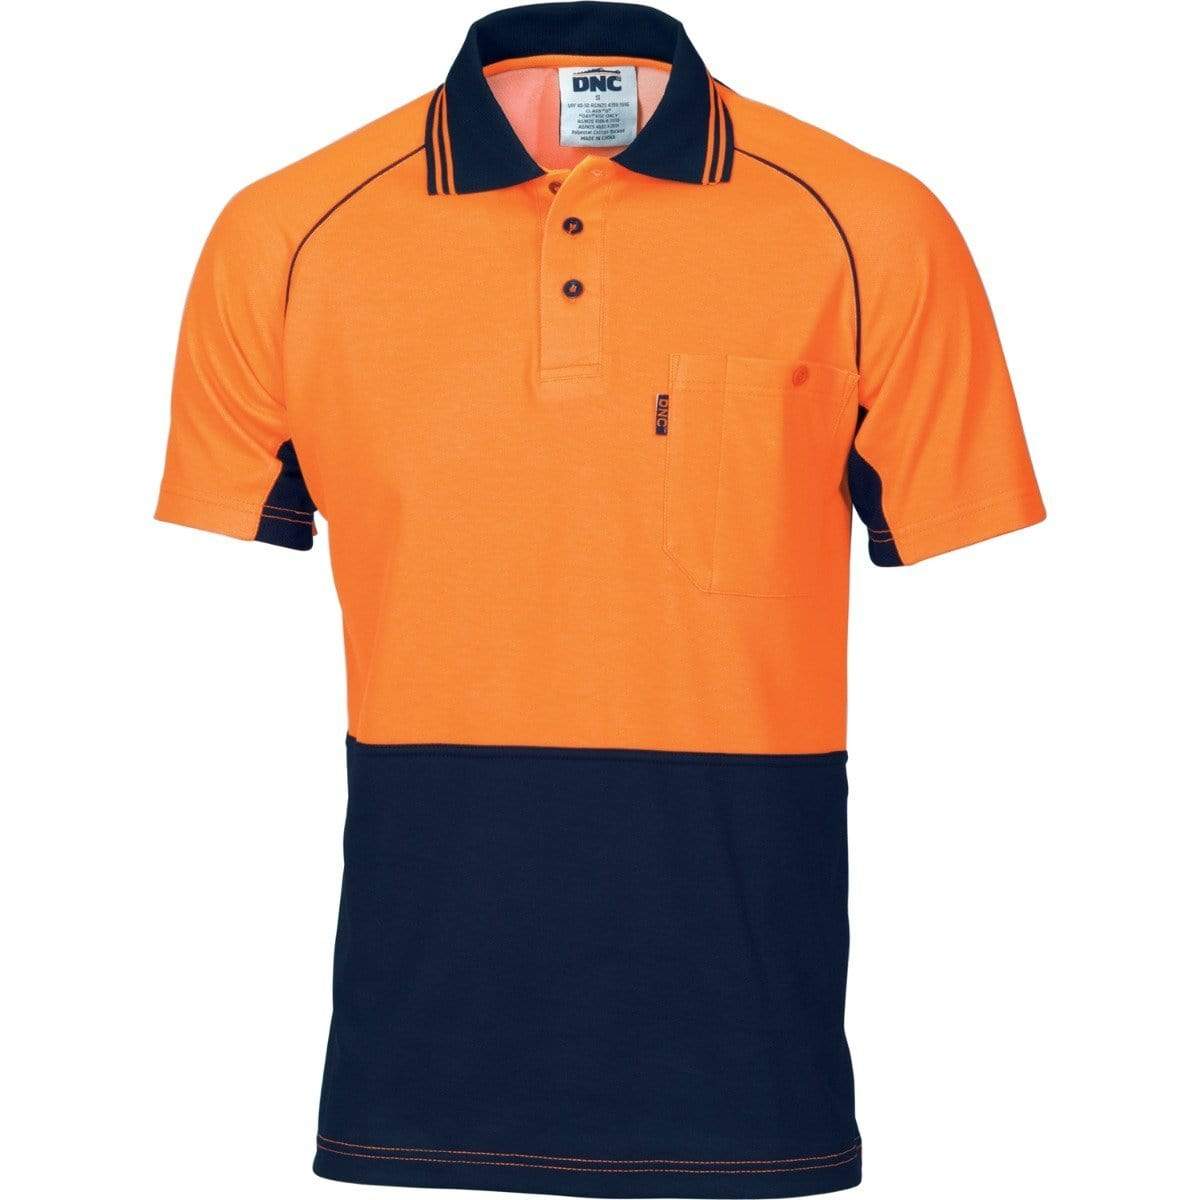 Dnc Workwear Hi-vis Cotton Backed Cool-breeze Contrast Short Sleeve Polo - 3719 Work Wear DNC Workwear Orange/Navy 2XL 